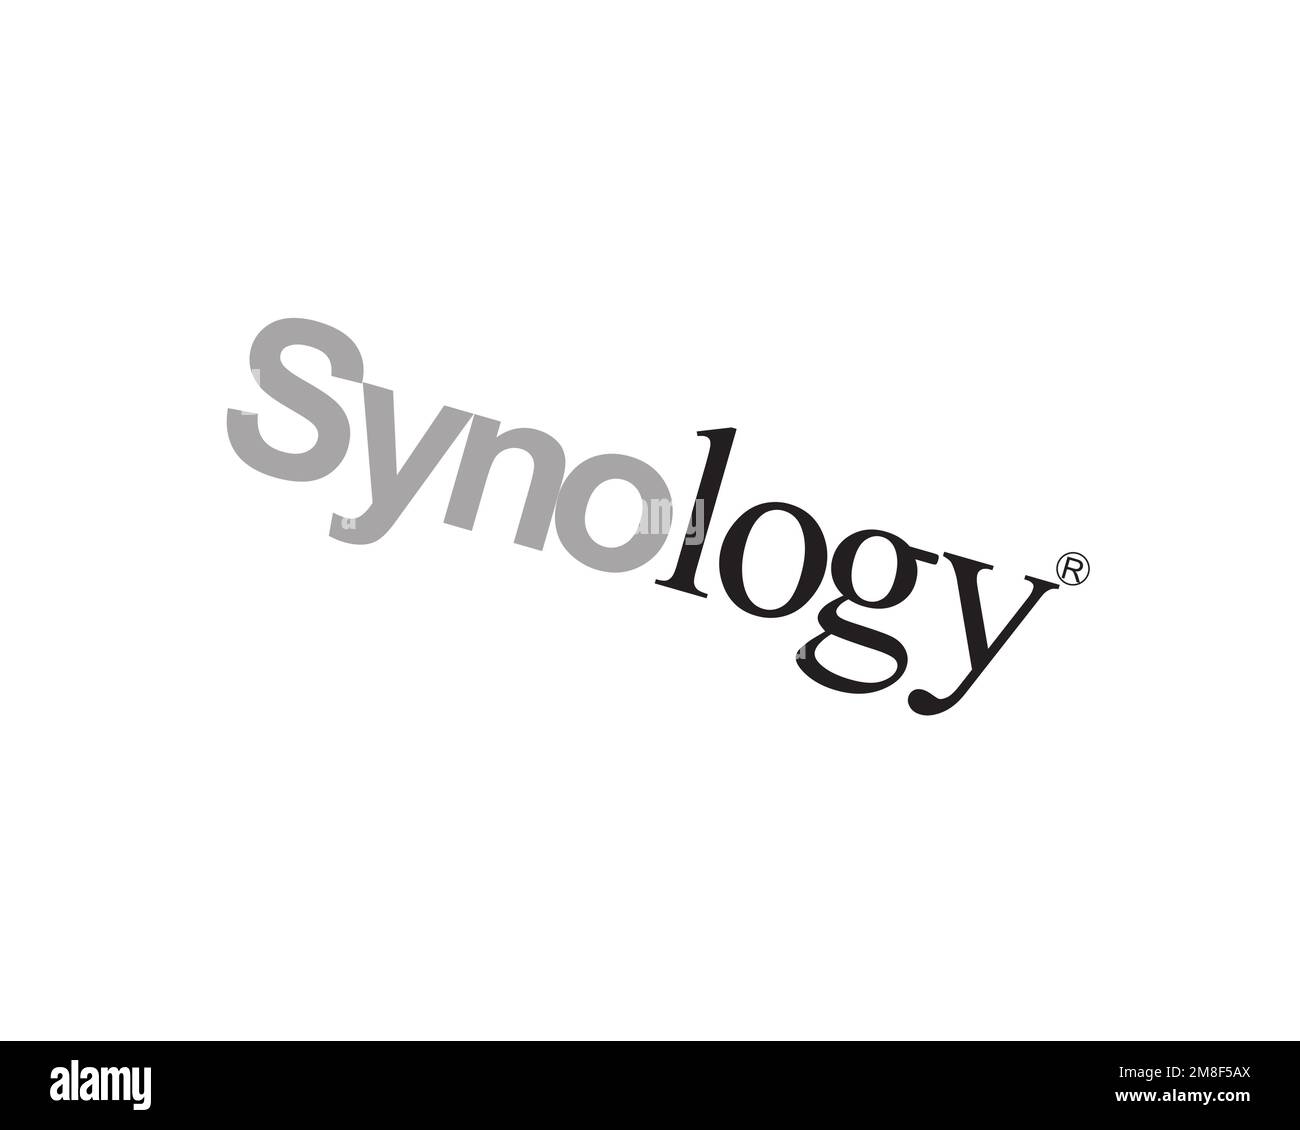 Synology Inc.